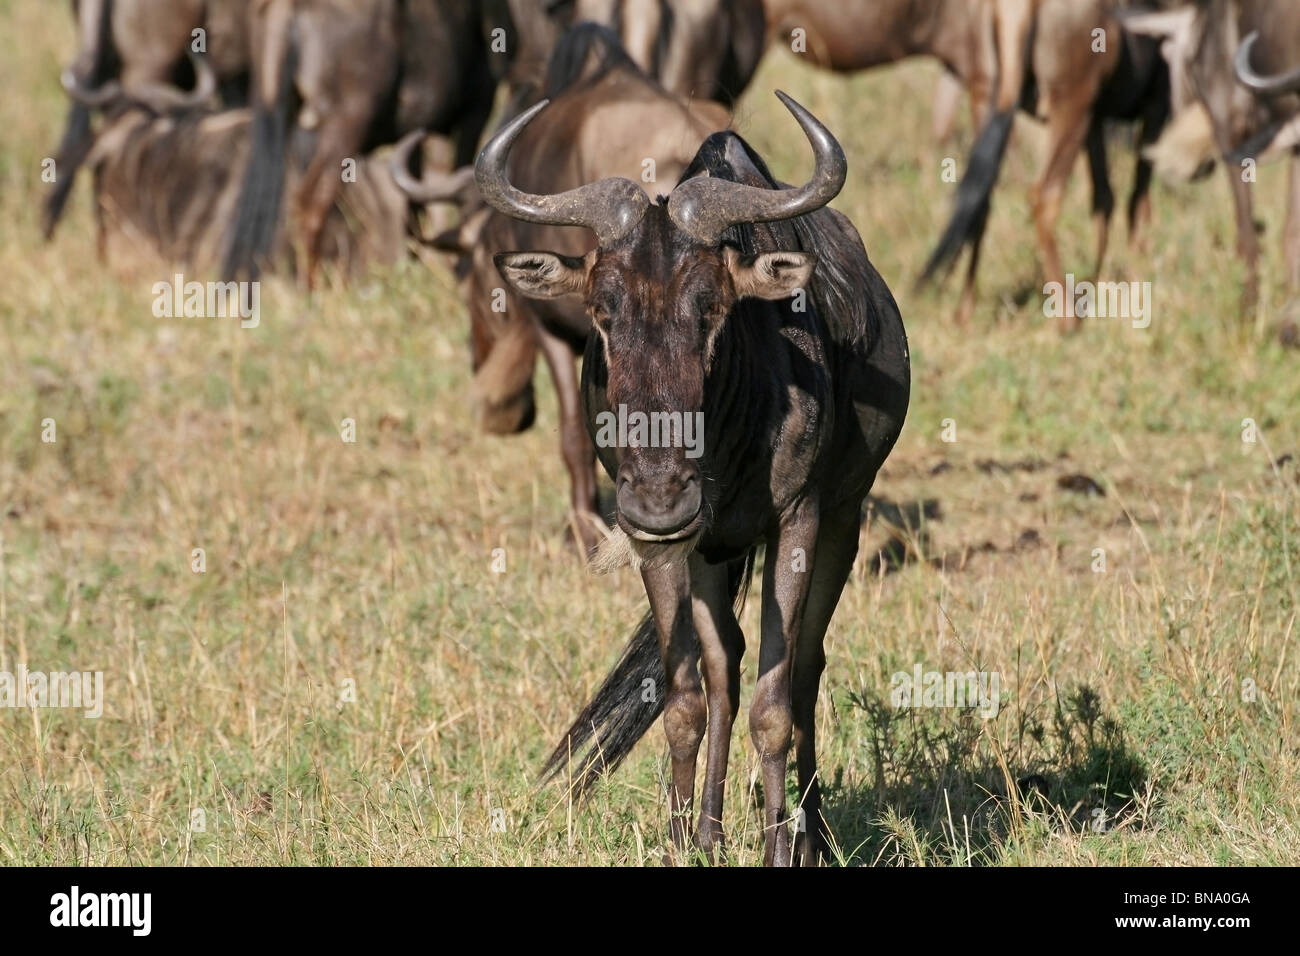 A Black Wildebeest Portrait shot. Picture taken in Masai Mara National Reserve, Kenya, East Africa Stock Photo